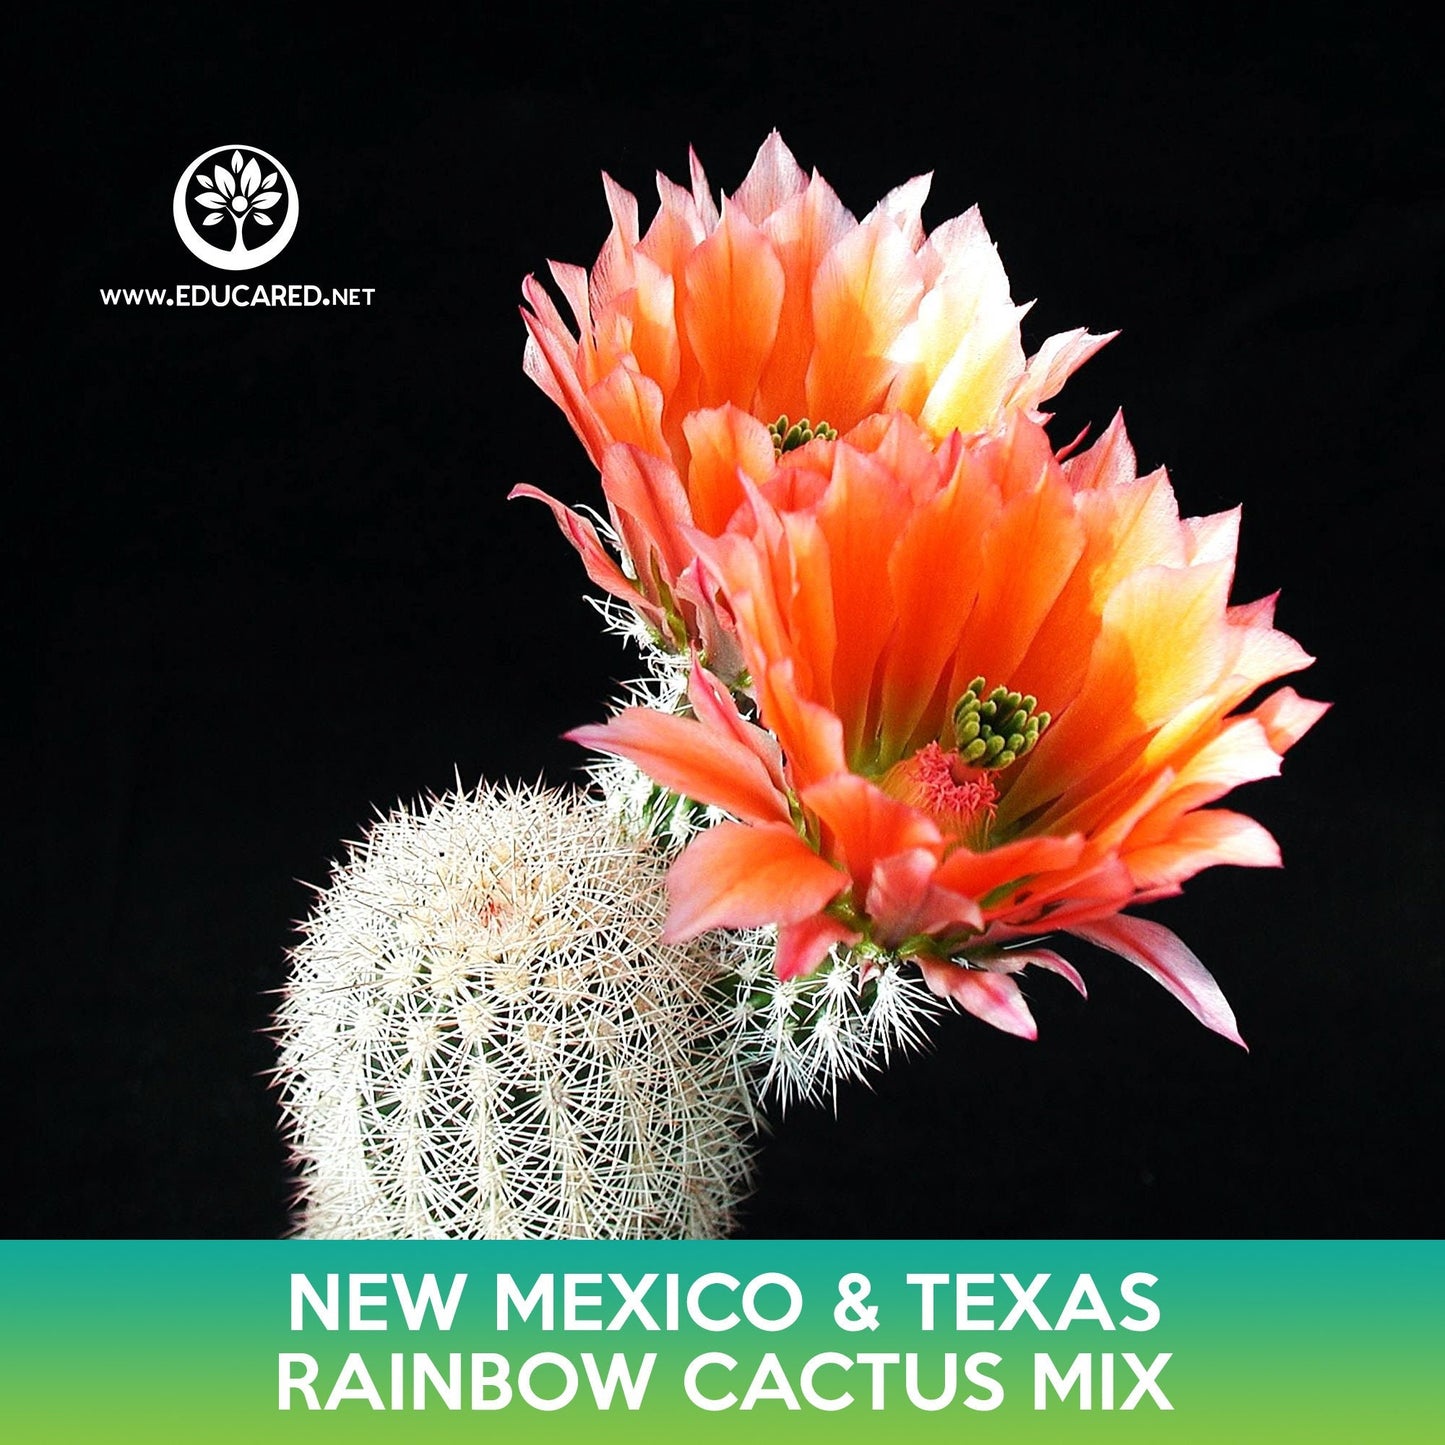 New Mexico and Texas Rainbow Cactus Mix Seeds, Echinocereus dasyacanthus